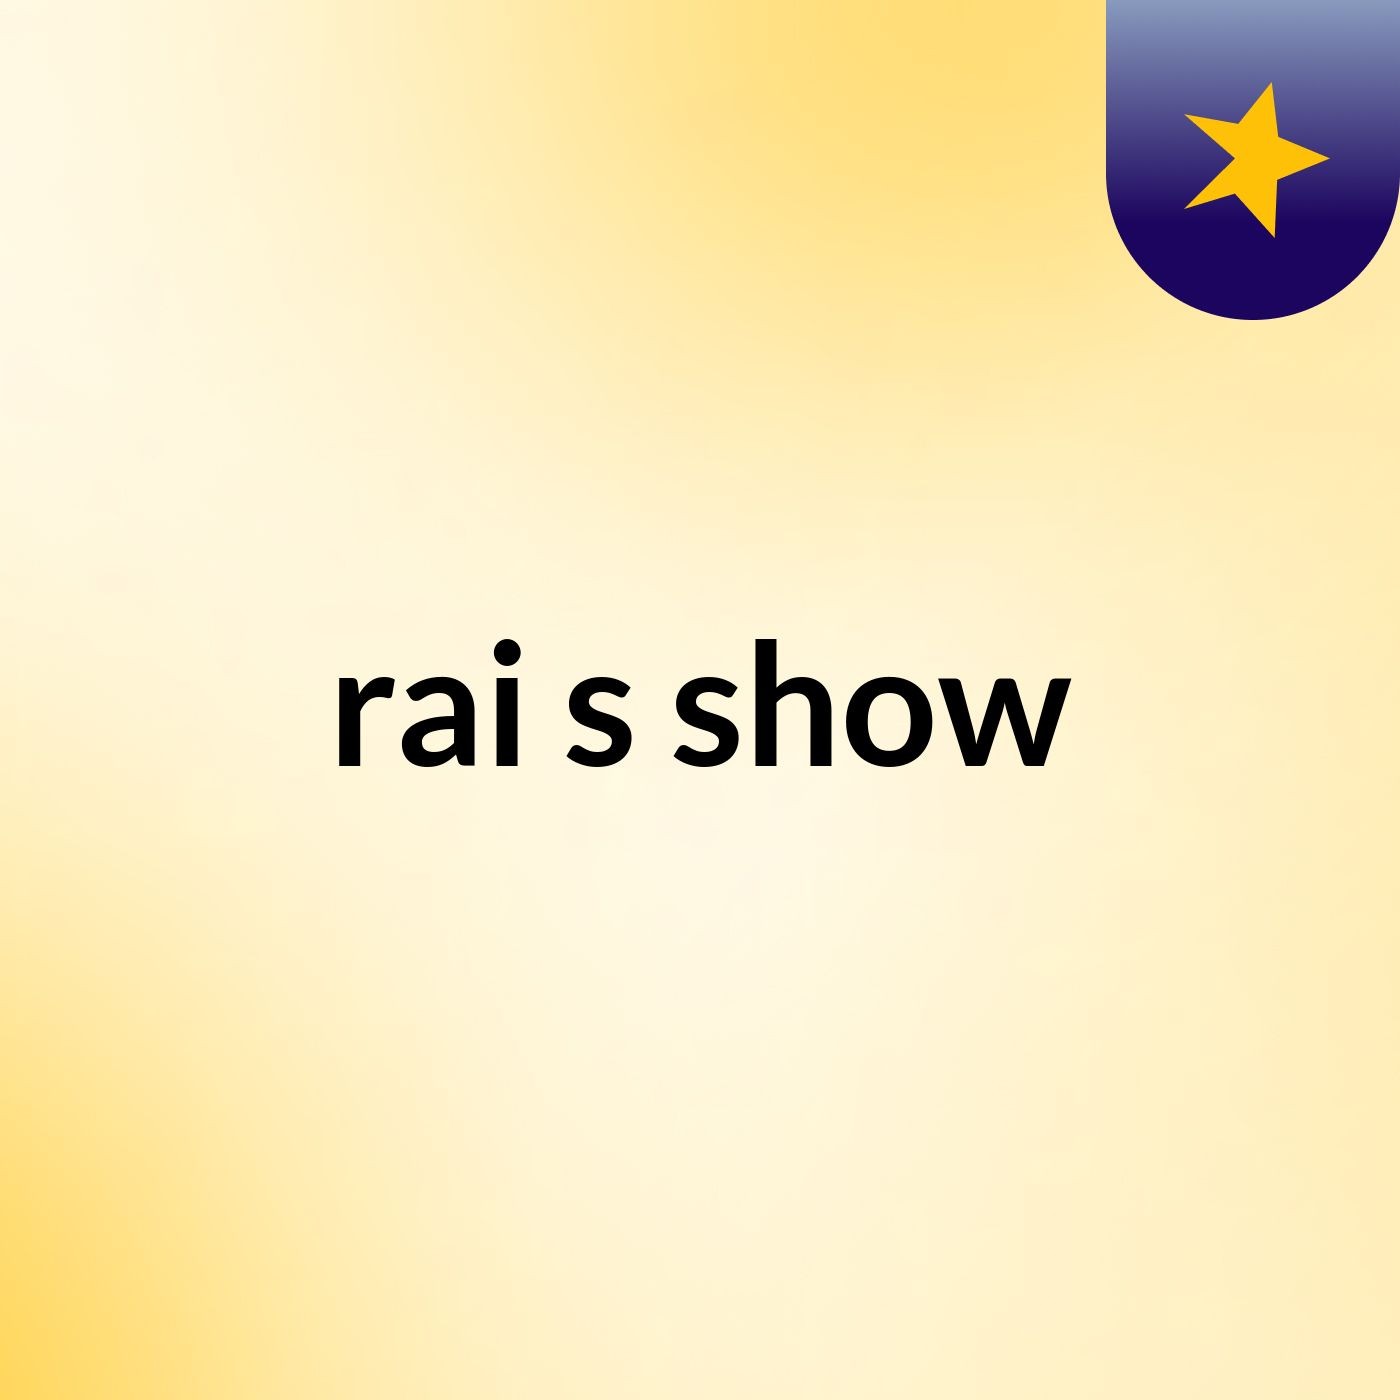 rai's show